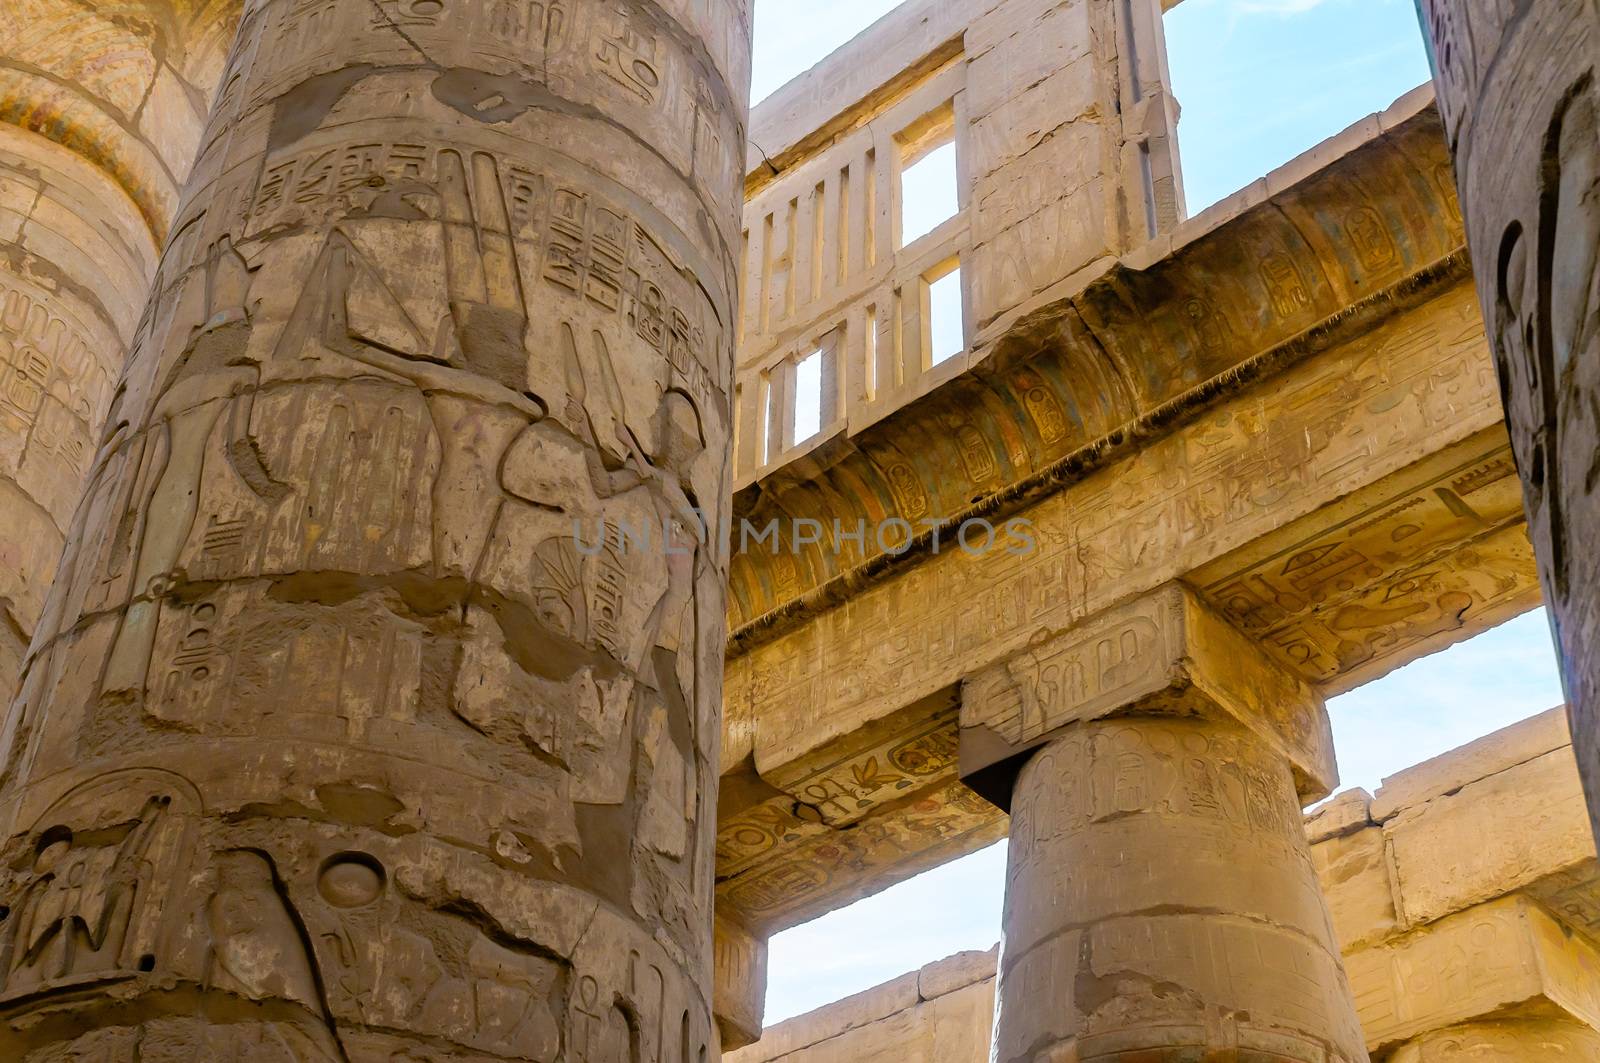 Columns' detail in the Karnak temple in Luxor, Egypt. Hieroglyphs